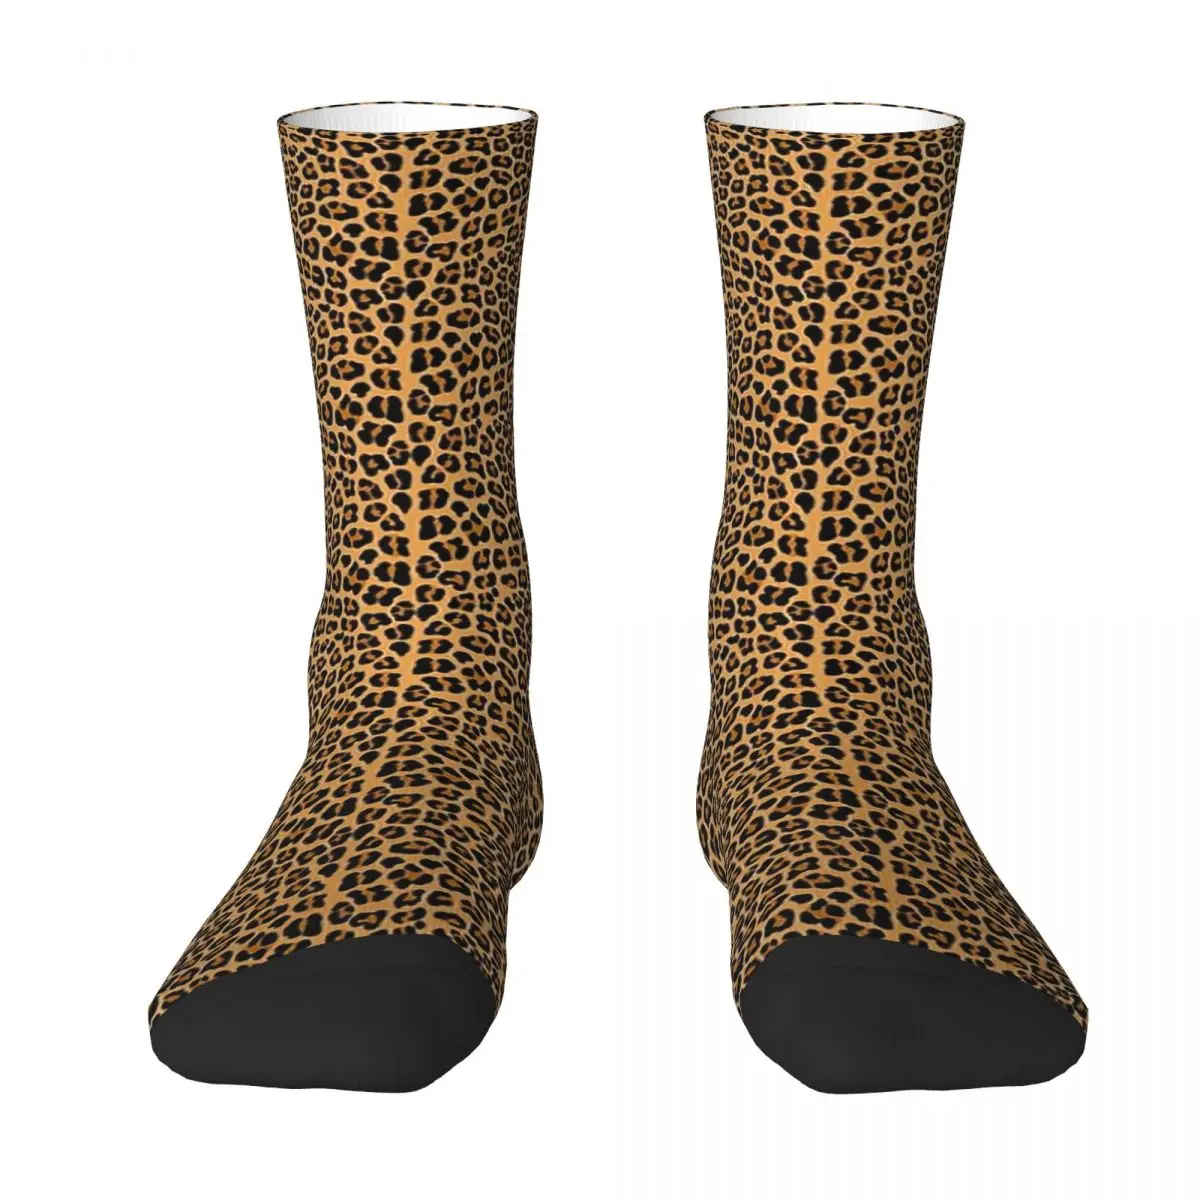 Leopard Print Adult Socks Unisex socks,men Socks women Socks women men funny socks soft elastic cute duck print ankle socks casual socks gift